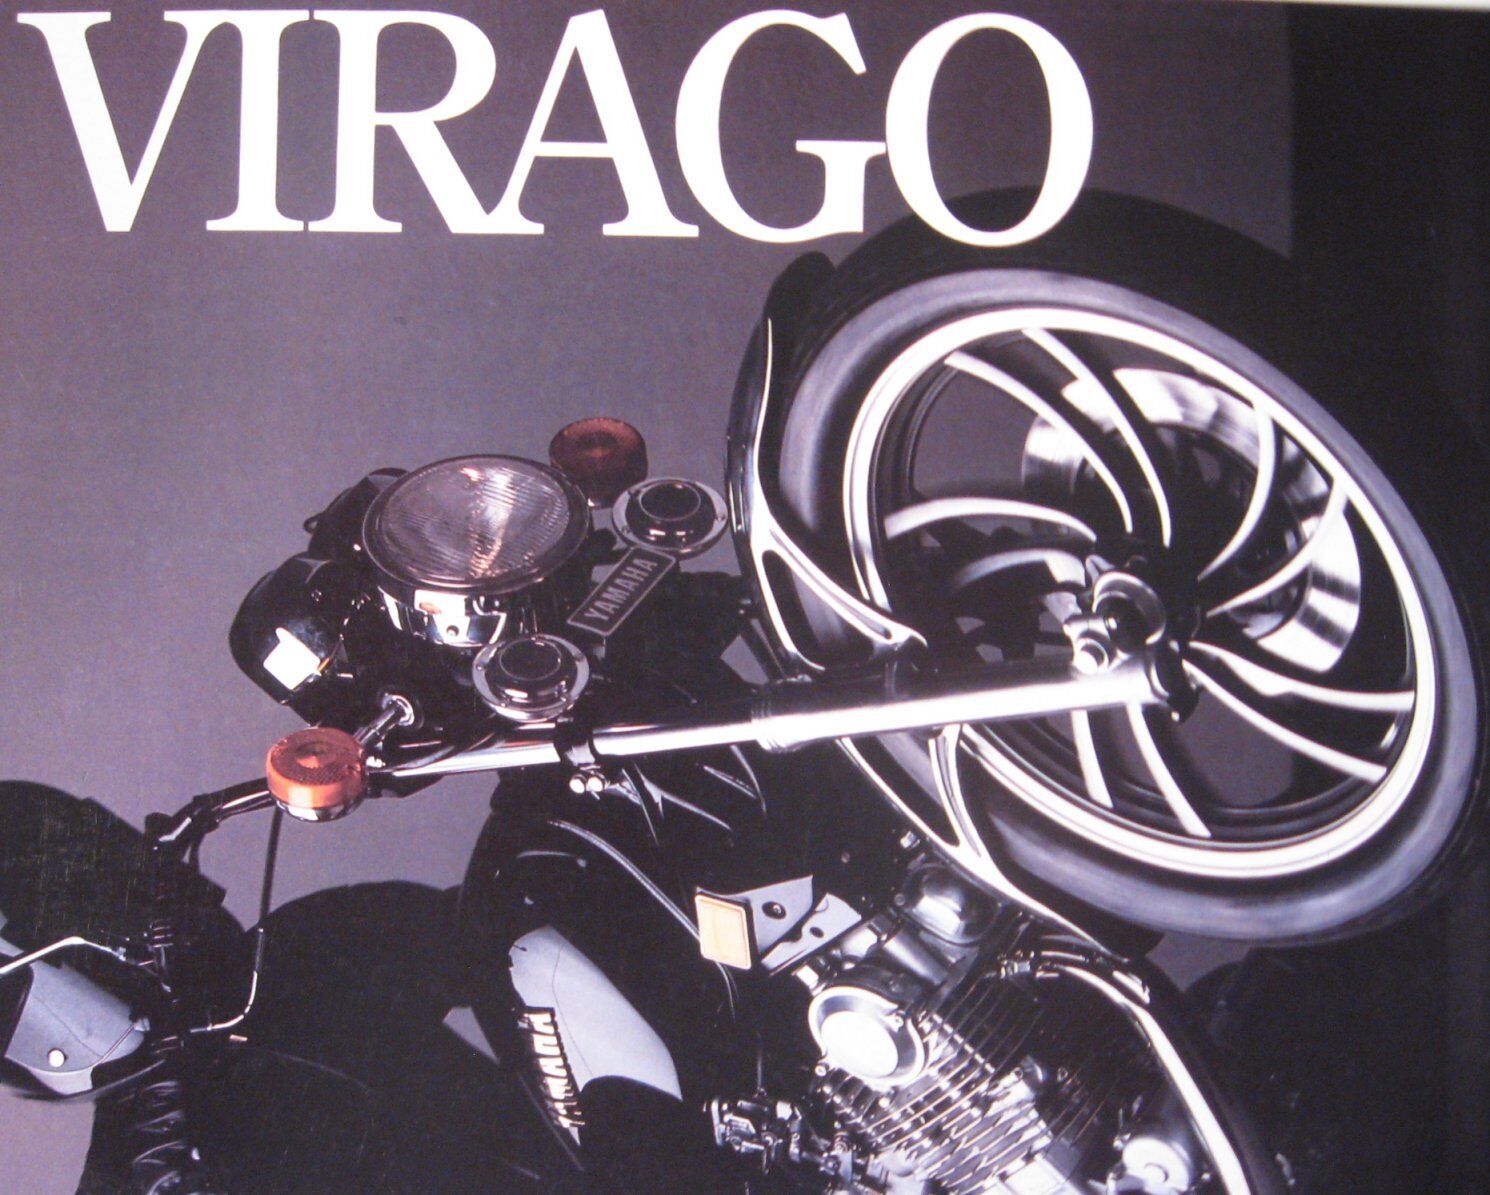 Yamaha Virago 750 Motorcycle Brochure, Original 